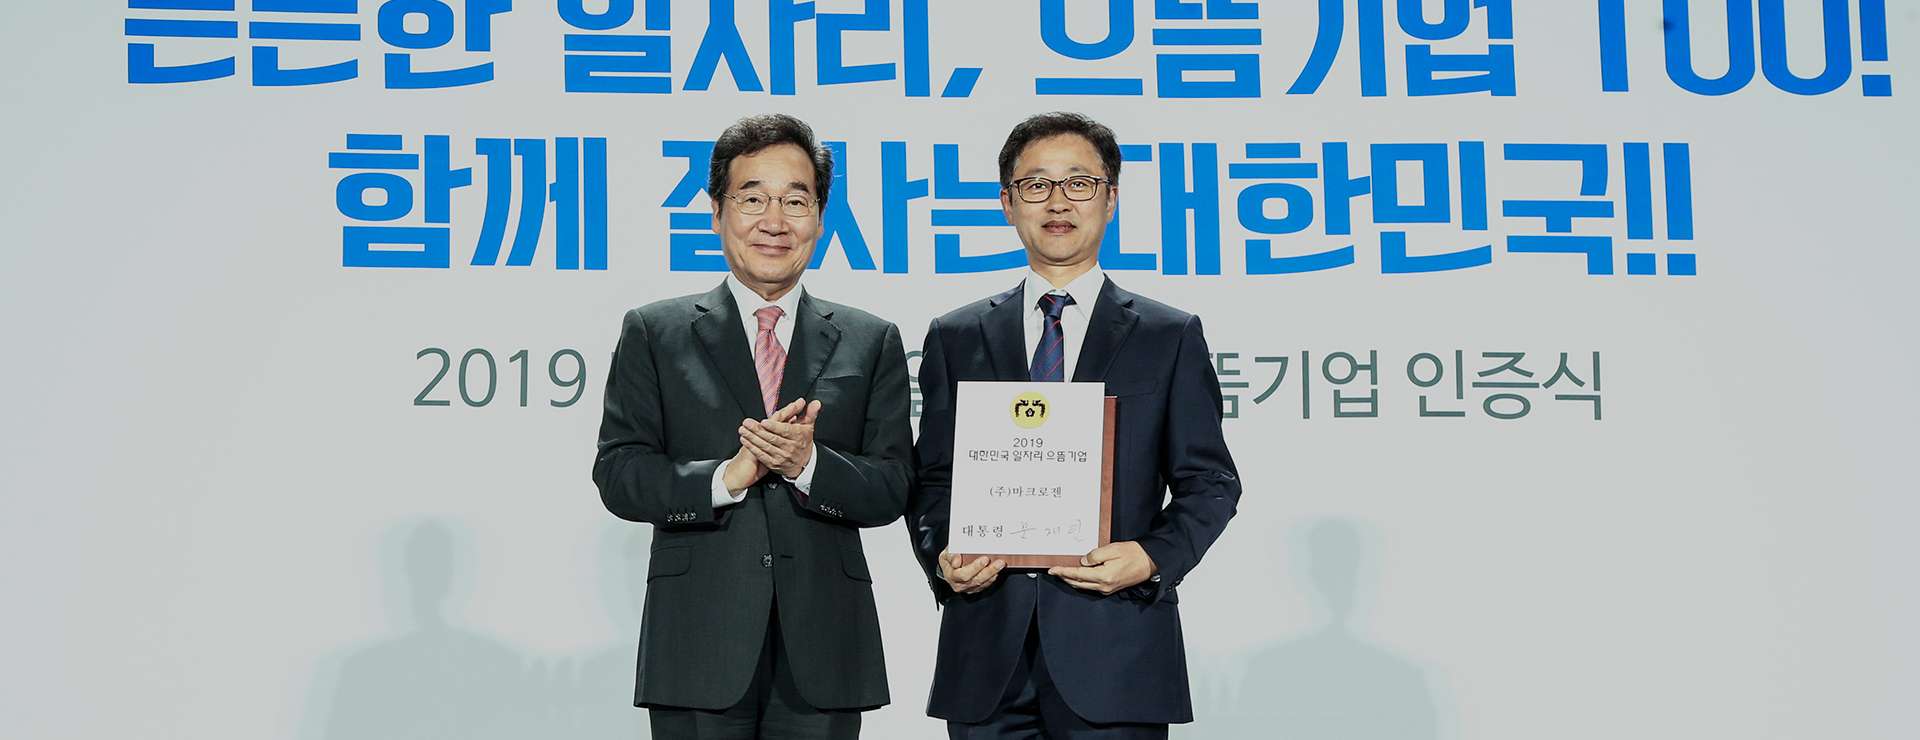 Certified as the best job in Korea.